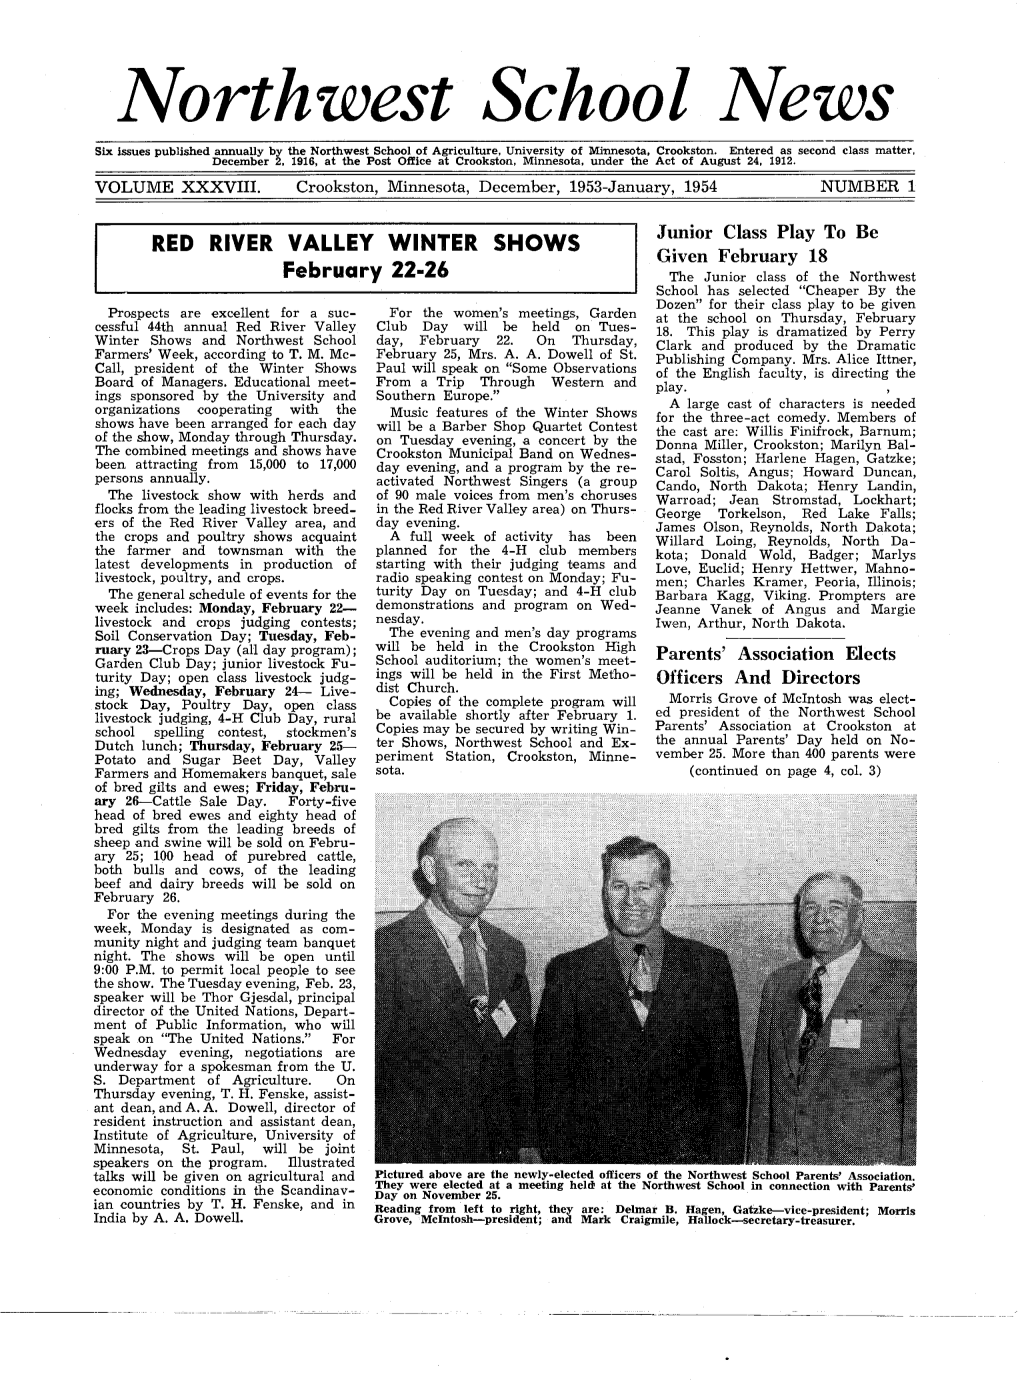 Northwest School News 1953-1954 Vol 38 No 1 December-January